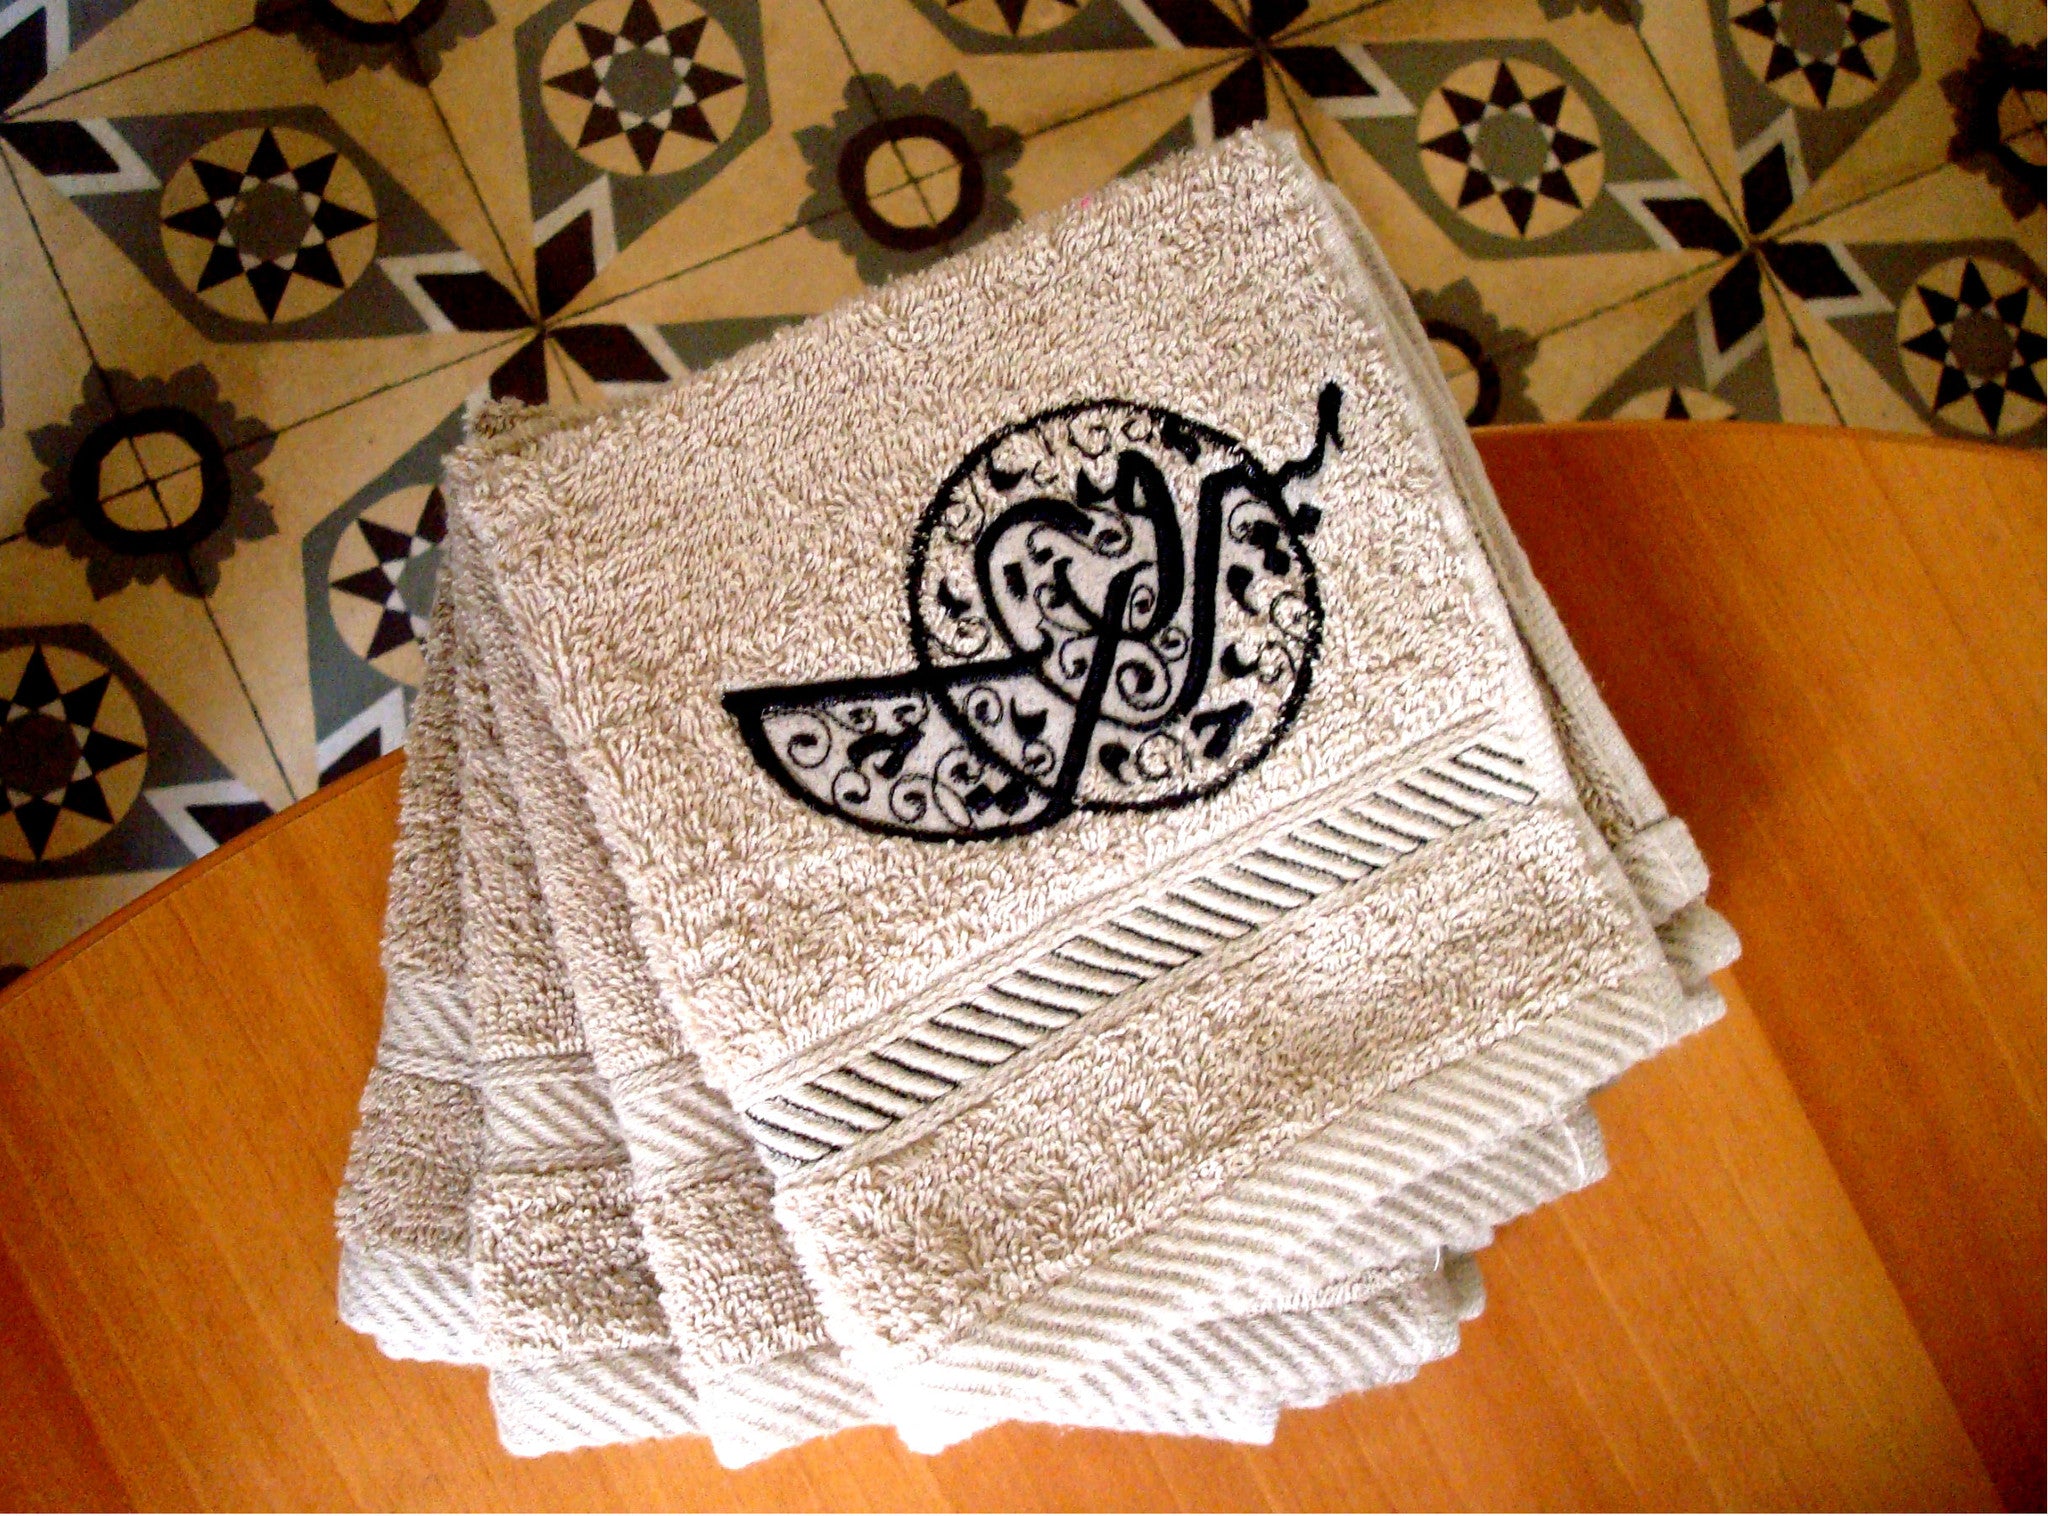 Personalized Embroidered Towel- Beirut|منشفة مصممة حسب الطلب